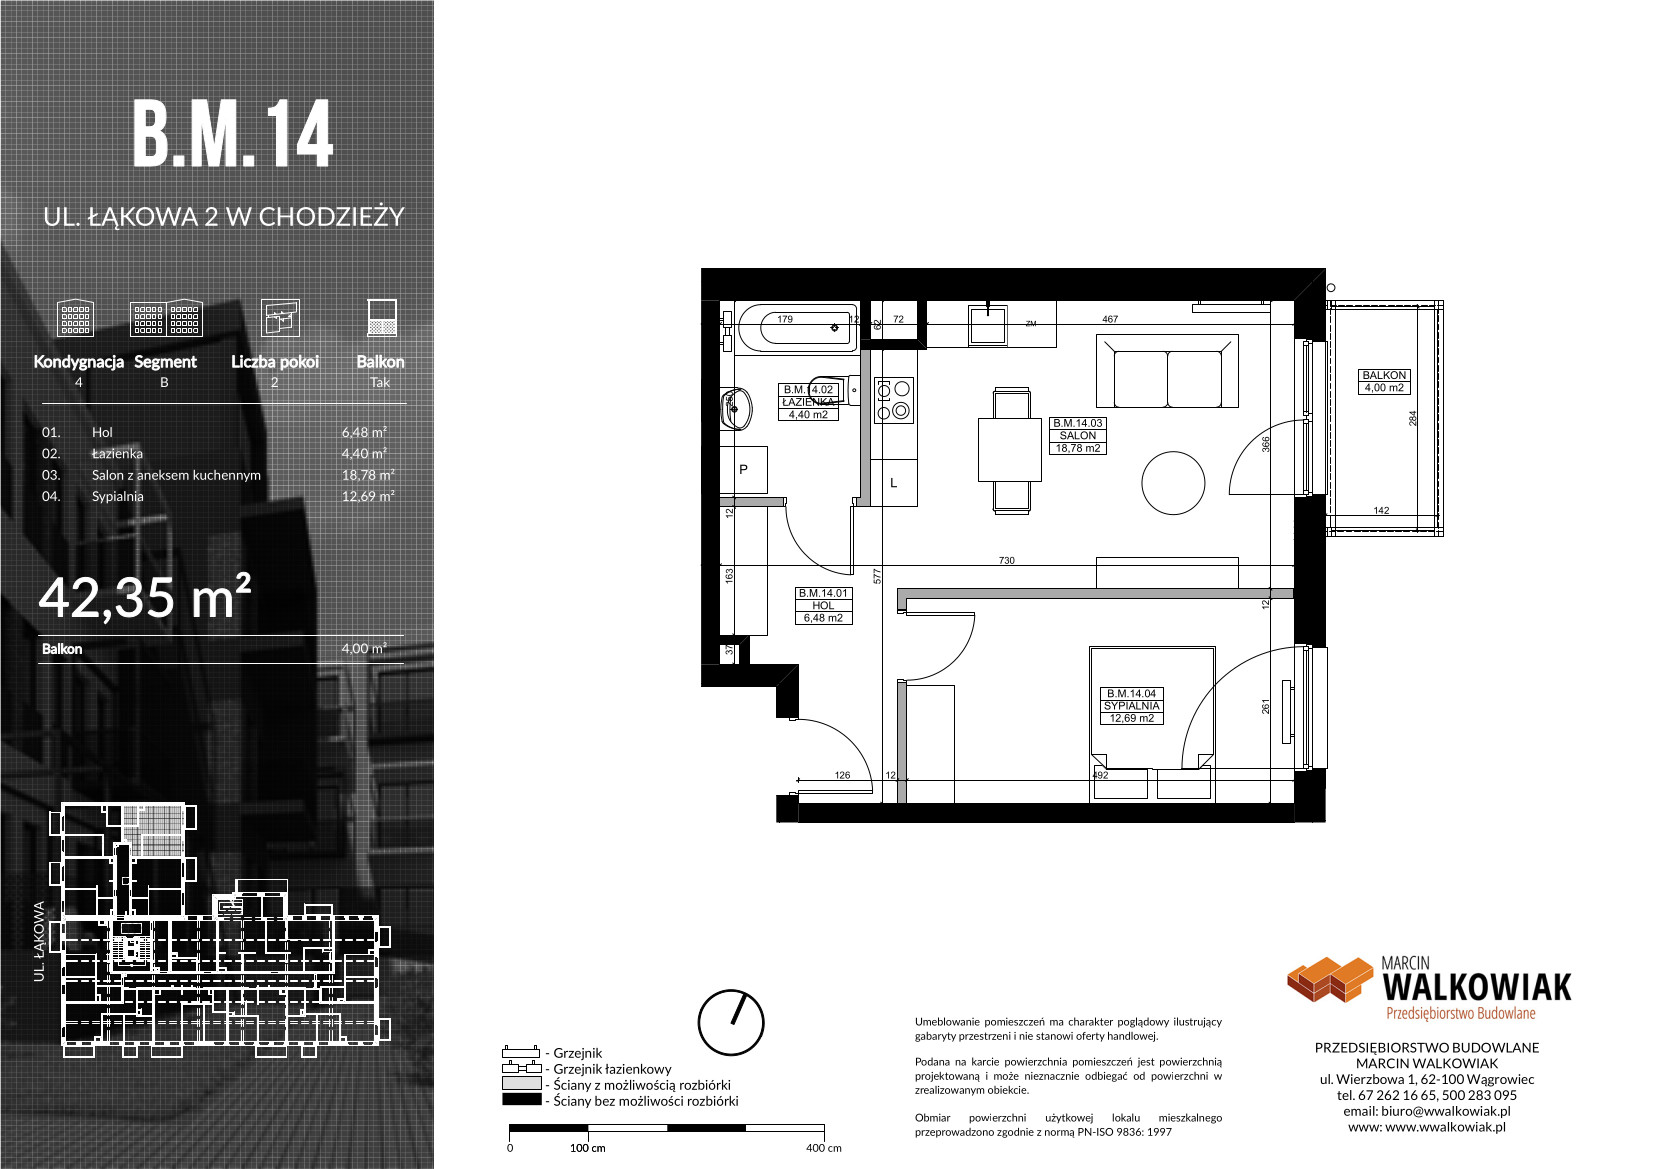 Opis mieszkania BM14 wraz z planem